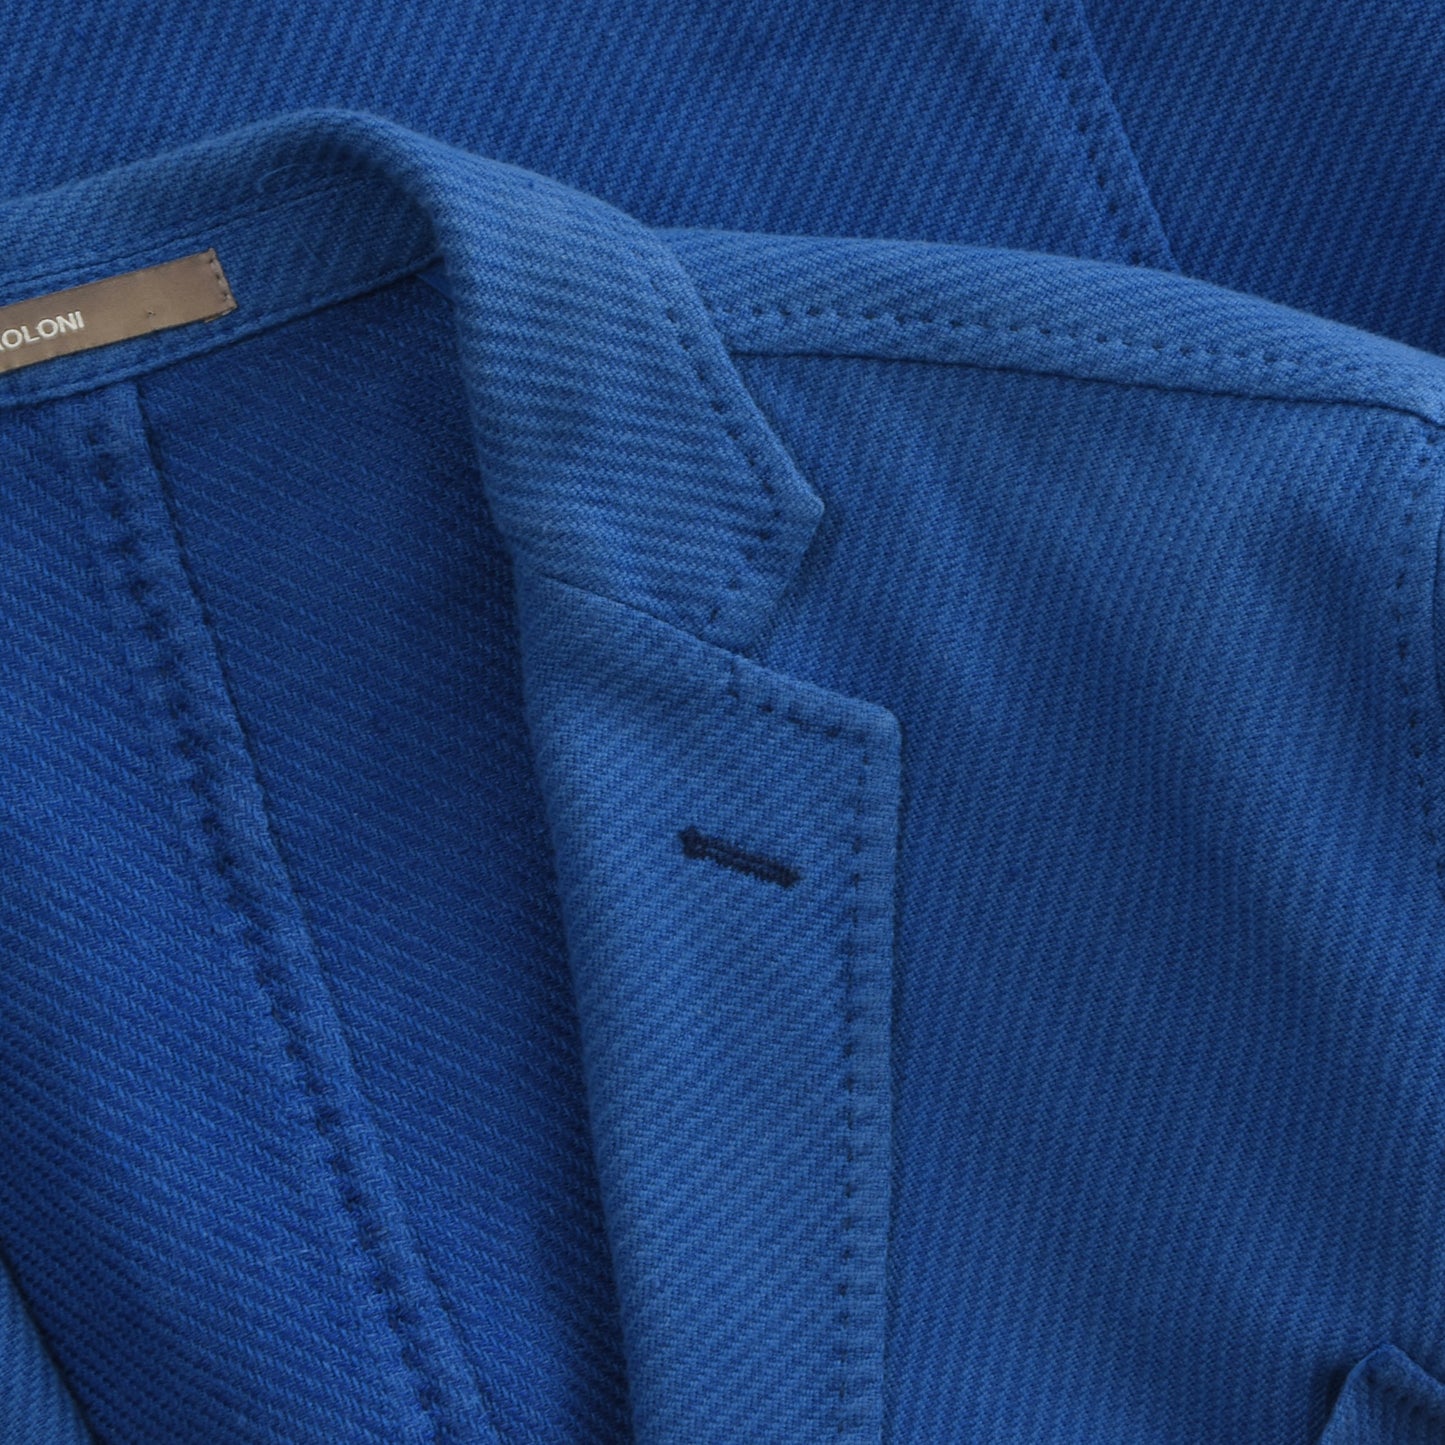 Paoloni Unstructured Jacket Size Chest ca. 53cm - Blue